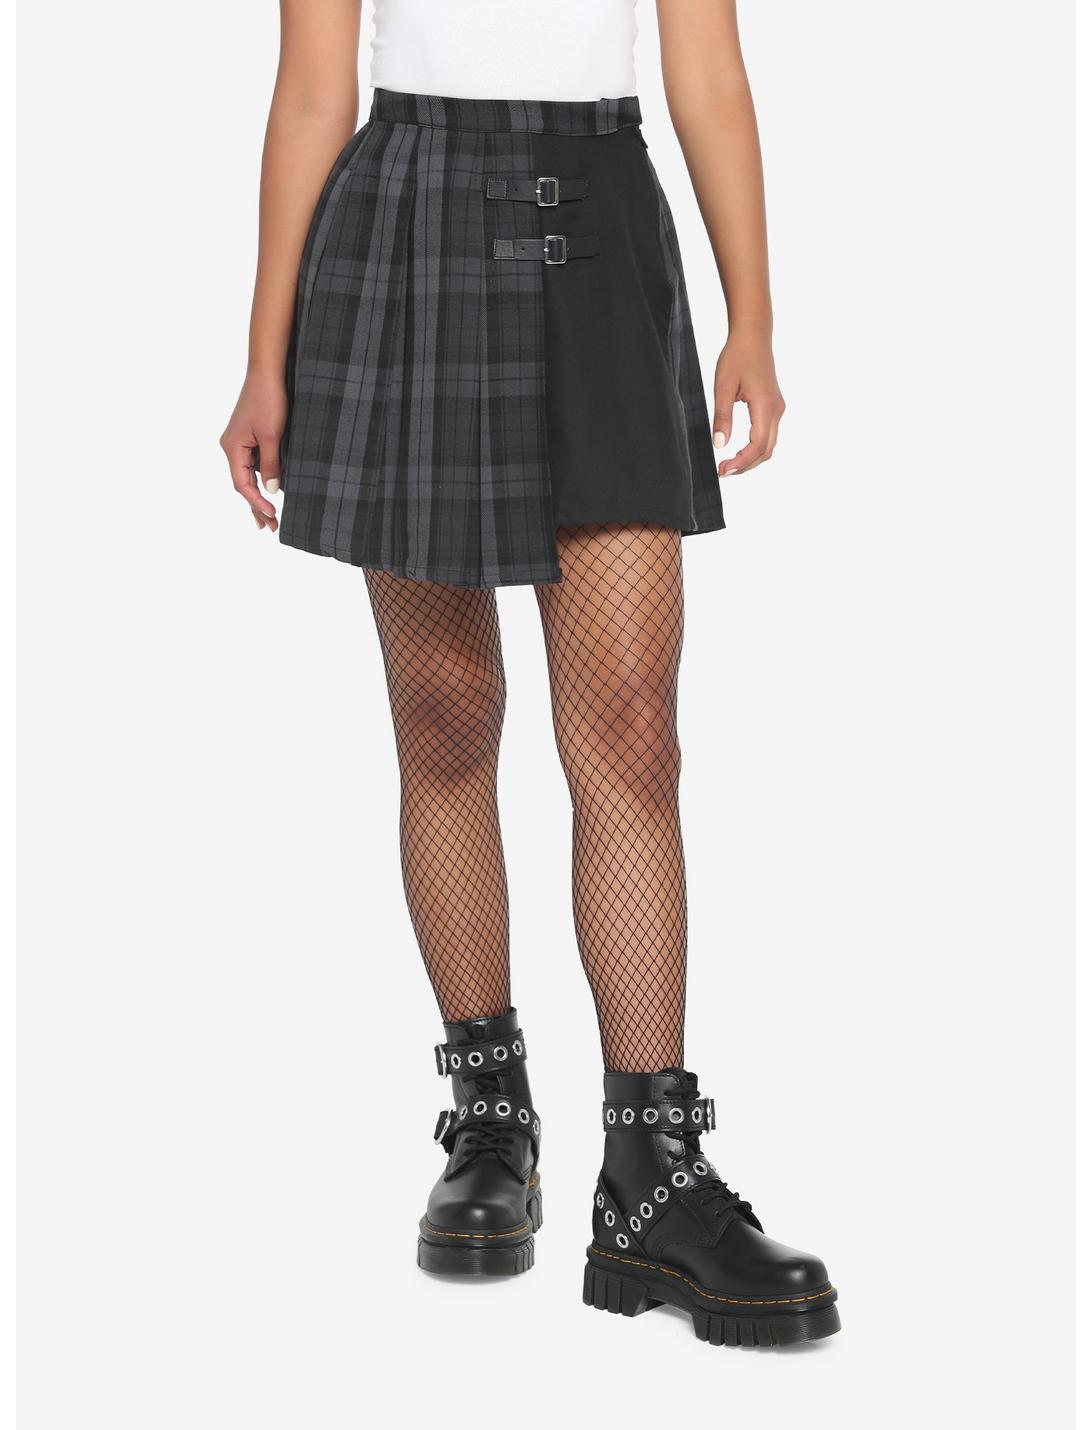 Black & Grey Plaid Buckle Asymmetrical Pleated Skirt, PLAID - GREY, hi-res